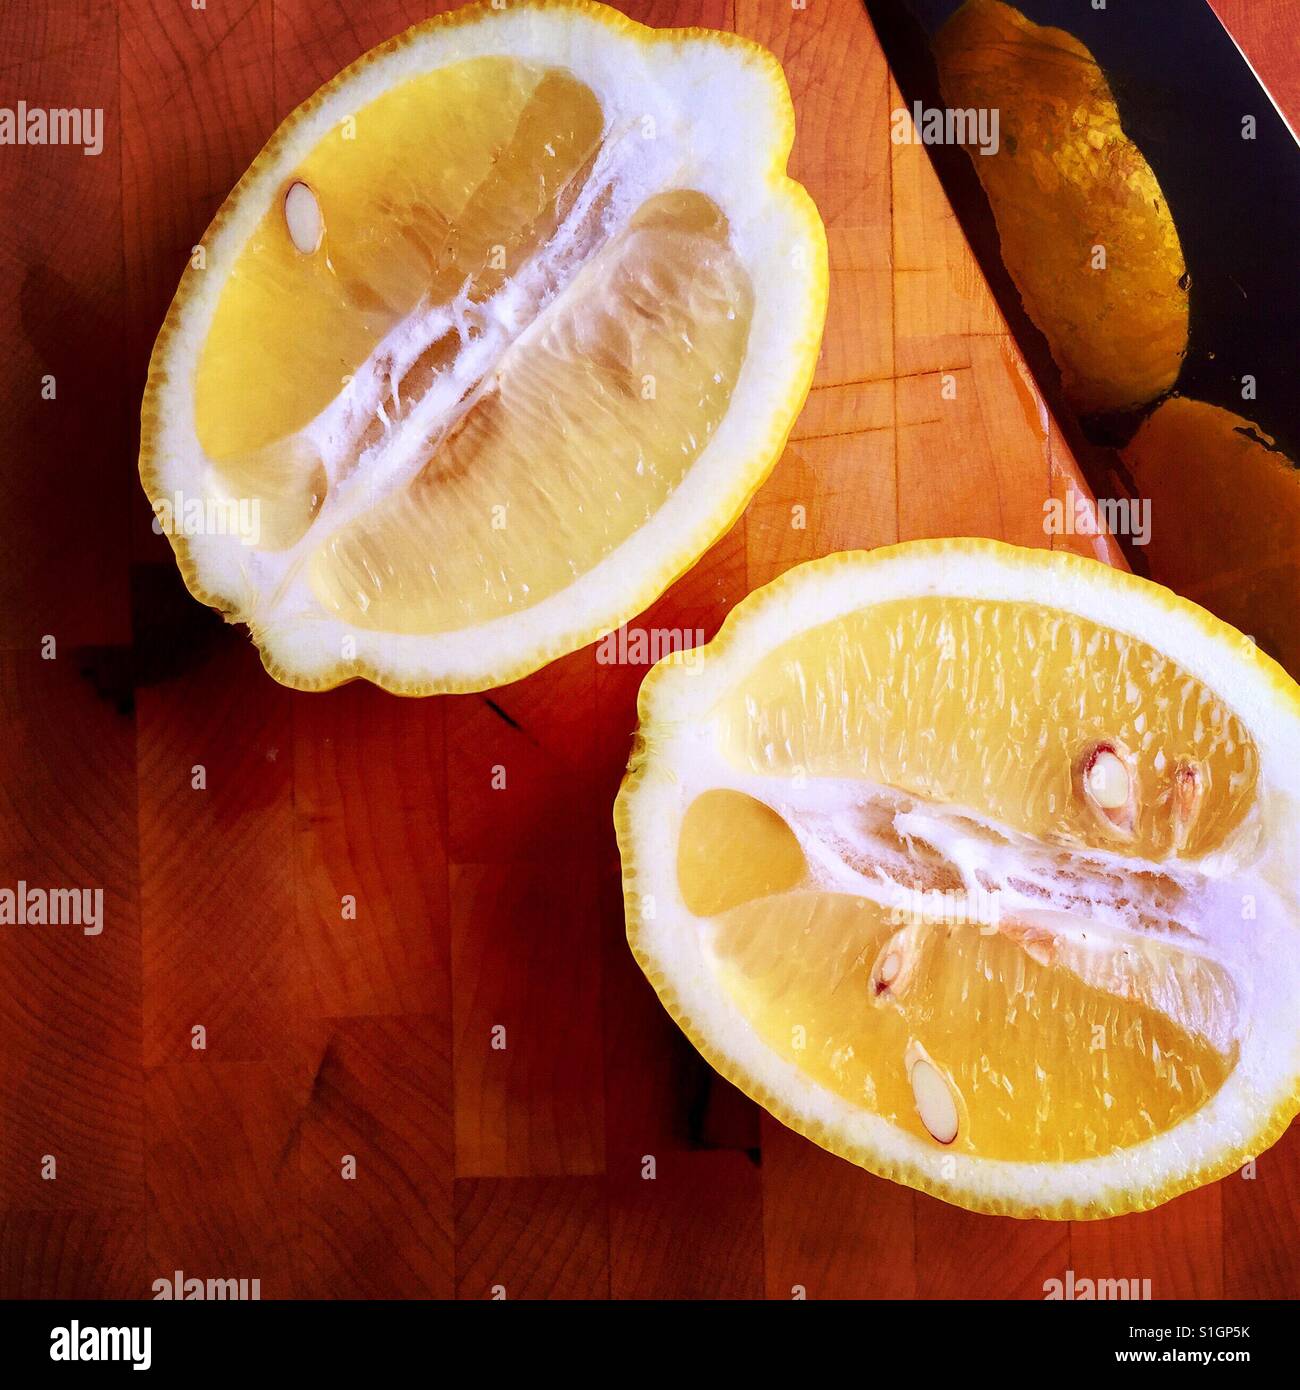 A fresh lemon cut in half on a wood cutting board with a knife Stock Photo